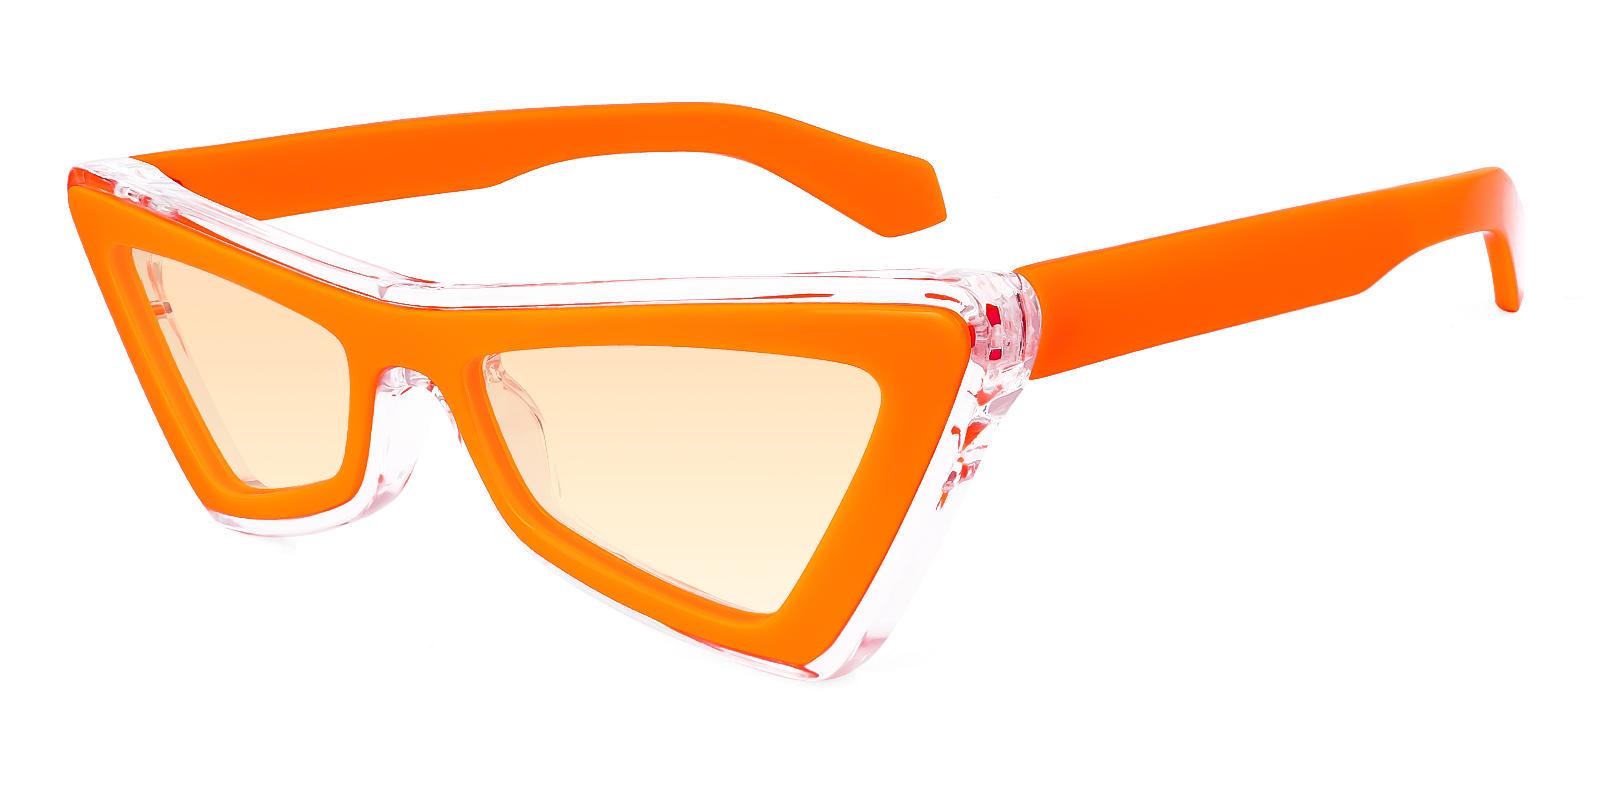 Bromo Orange Acetate Sunglasses , UniversalBridgeFit Frames from ABBE Glasses